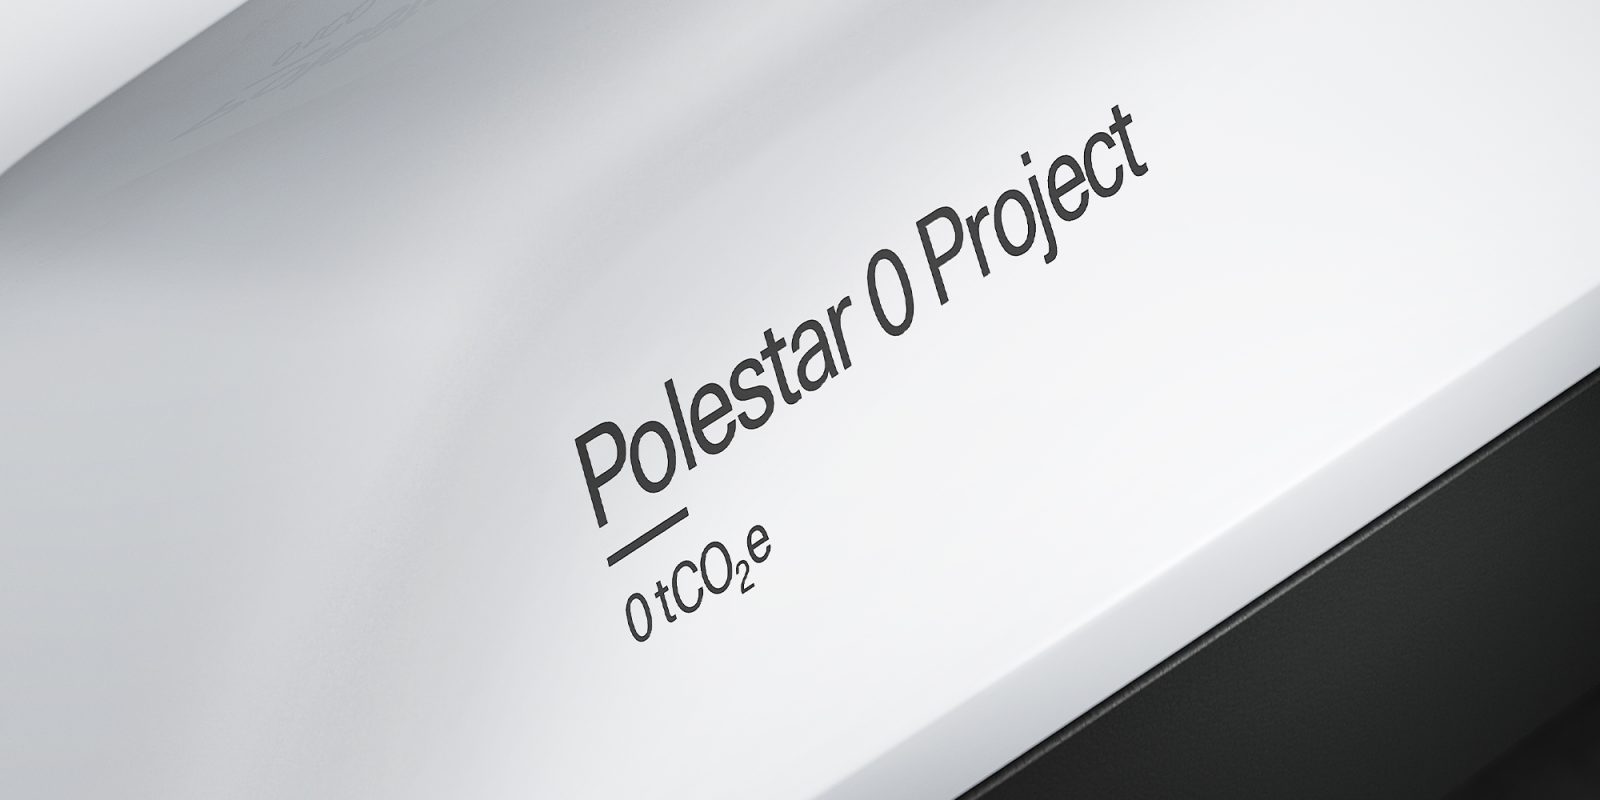 Polestar 0 Project